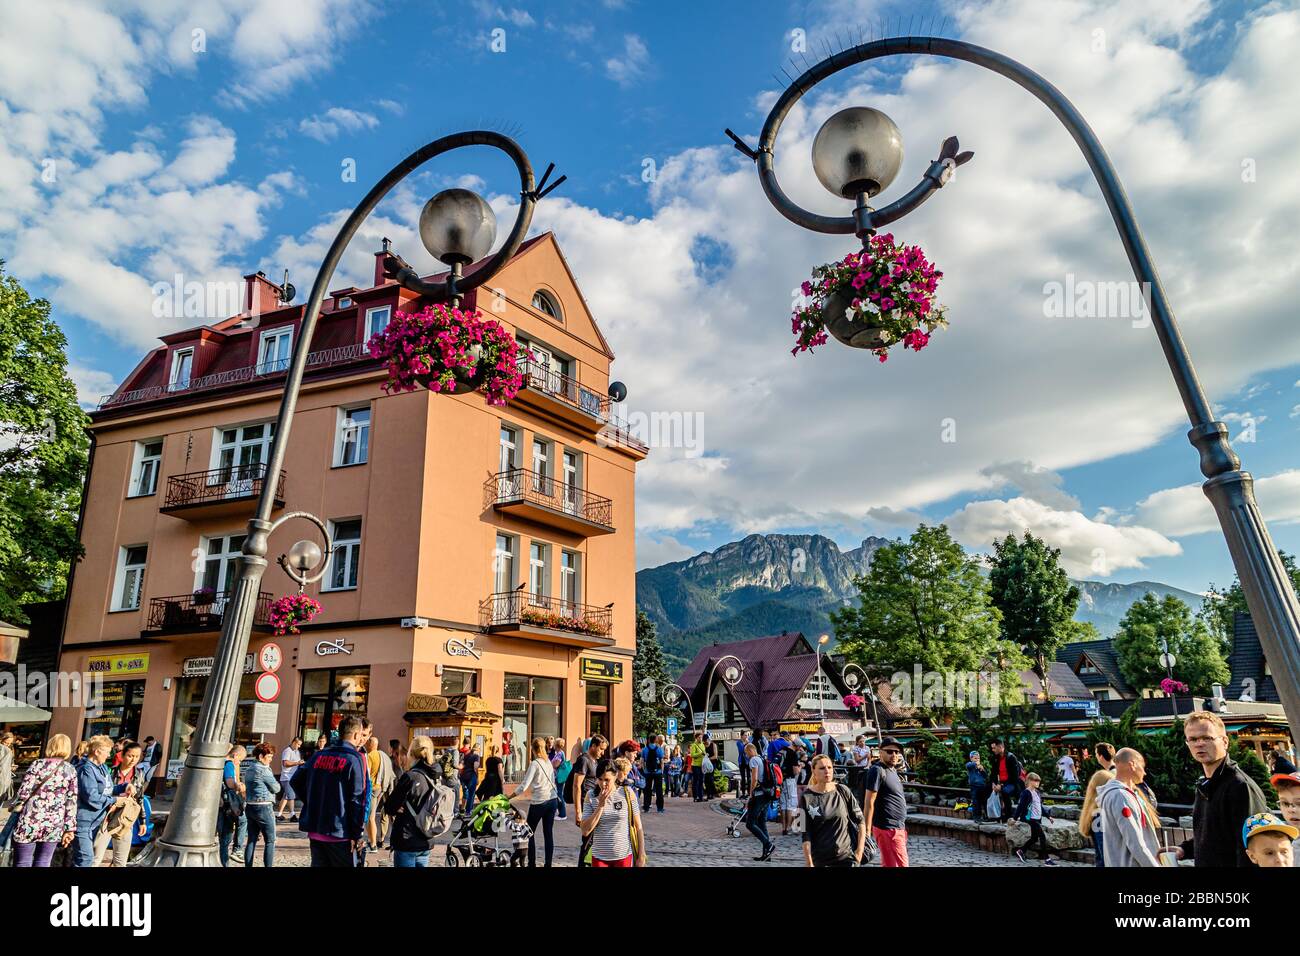 Krupówki, a popular tourist shopping street in the town centre of Zakopane in the Polish Tatra mountains. Zakopane, Poland. July 2017. Stock Photo